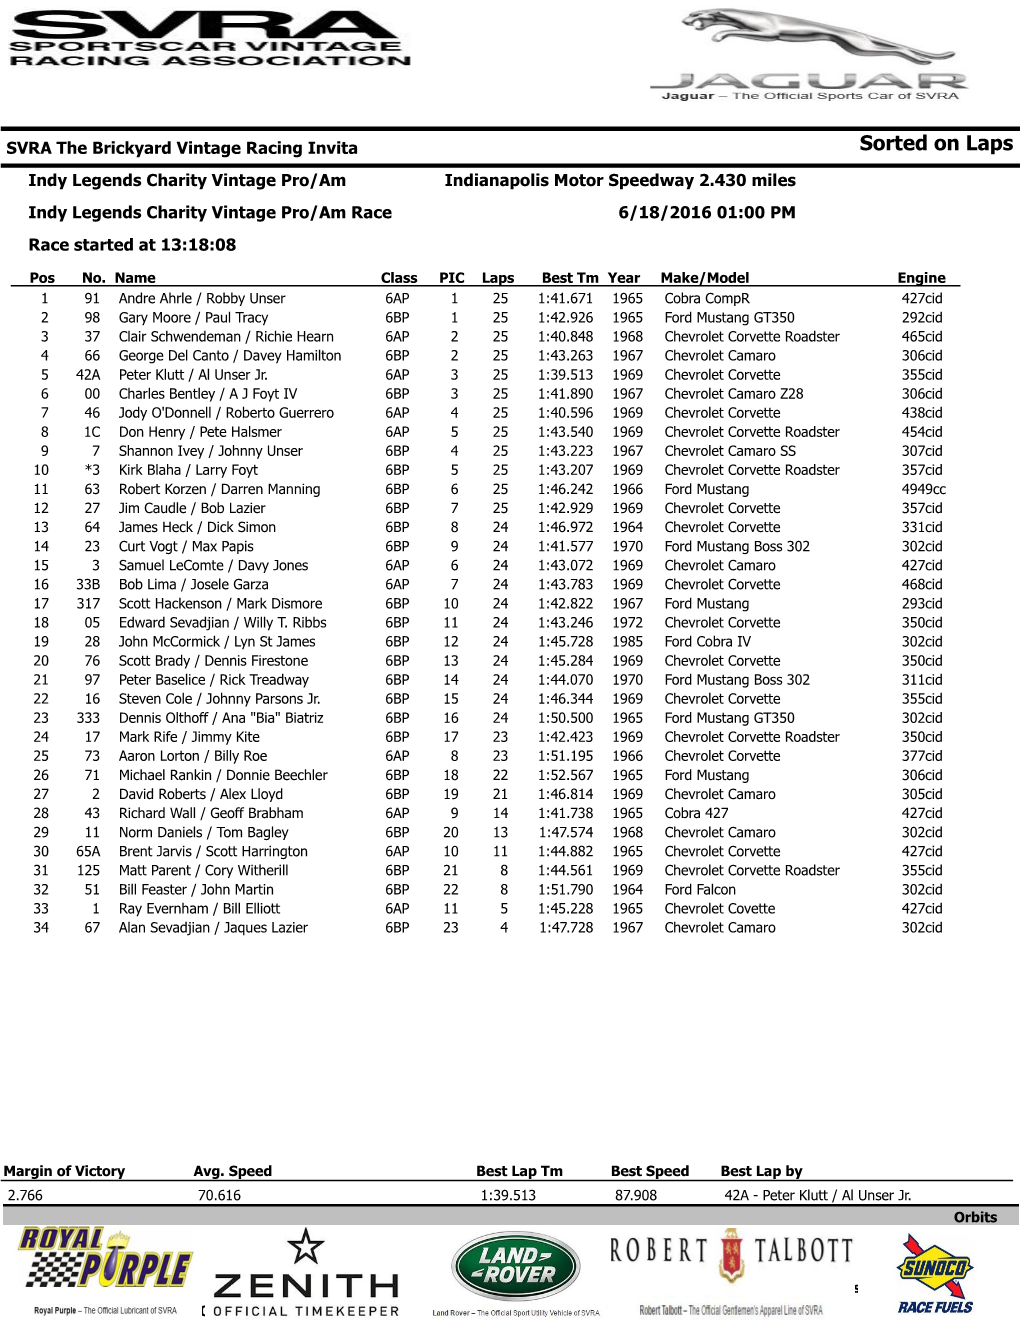 Indy Legends Pro/Am Race Results